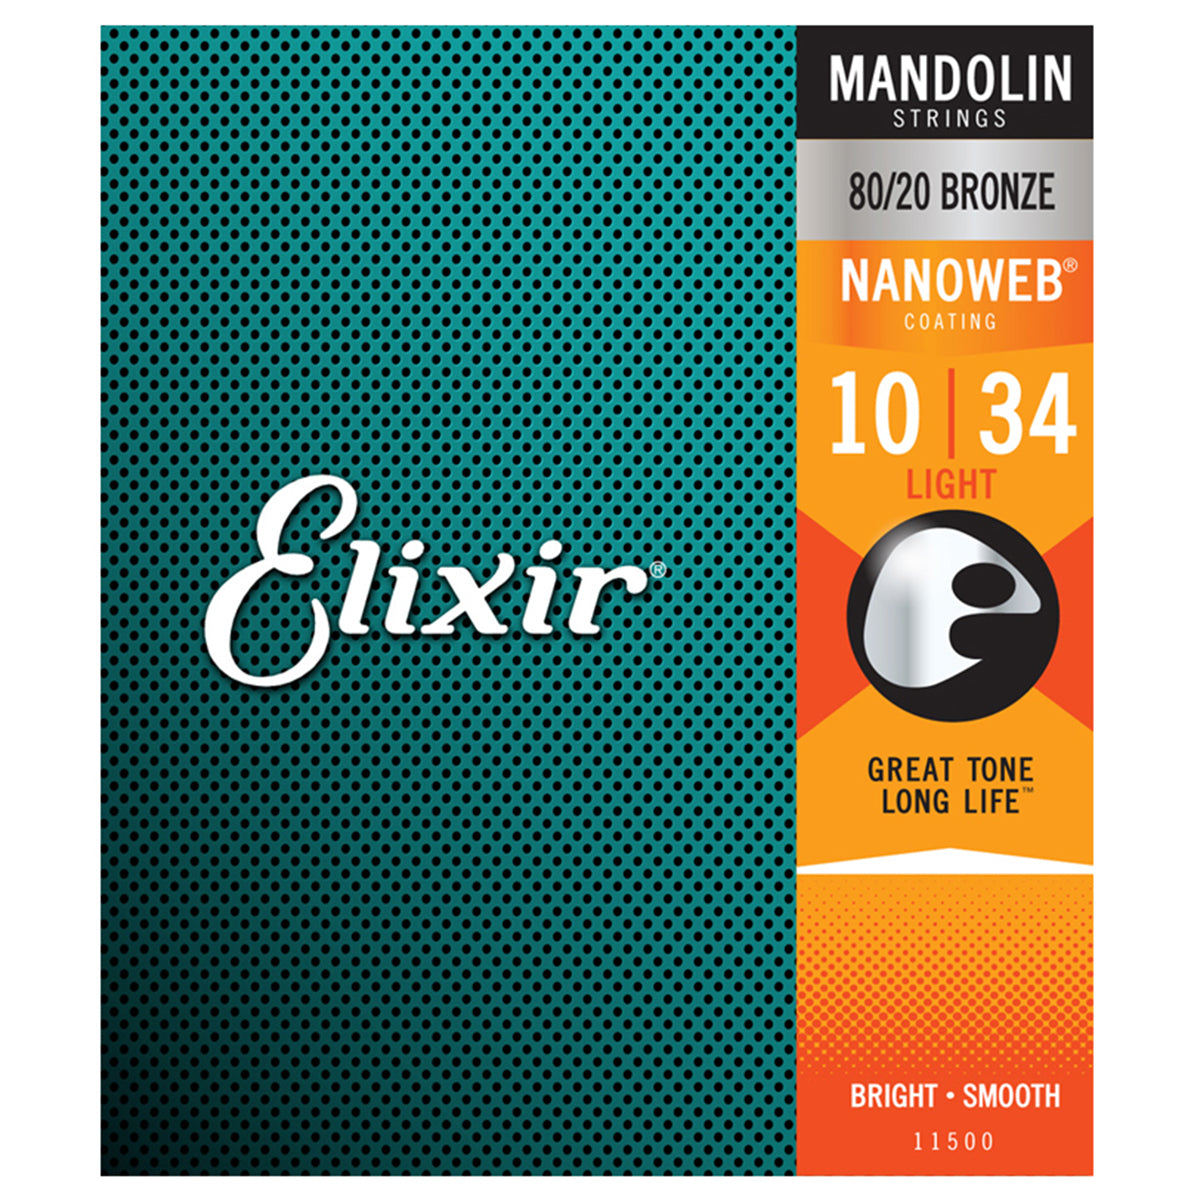 Elixir 11500 Mandolin Strings 80/20 Bronze Light Nanoweb 0.10-0.34